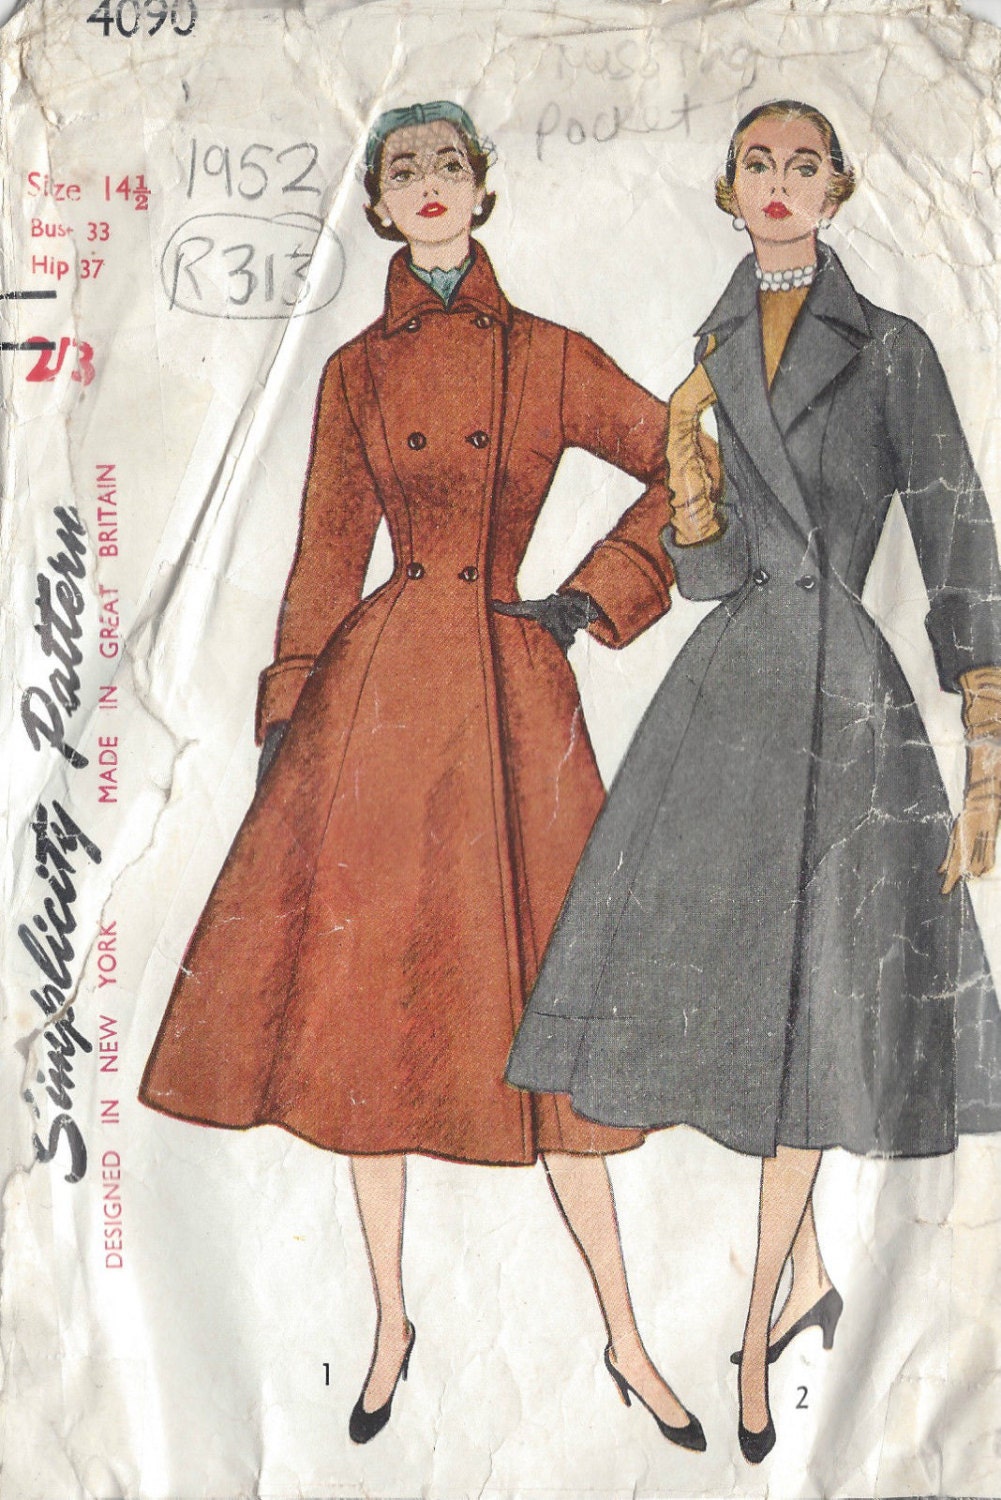 1952 Vintage Sewing Pattern COAT B33 R313 Simplicity | Etsy